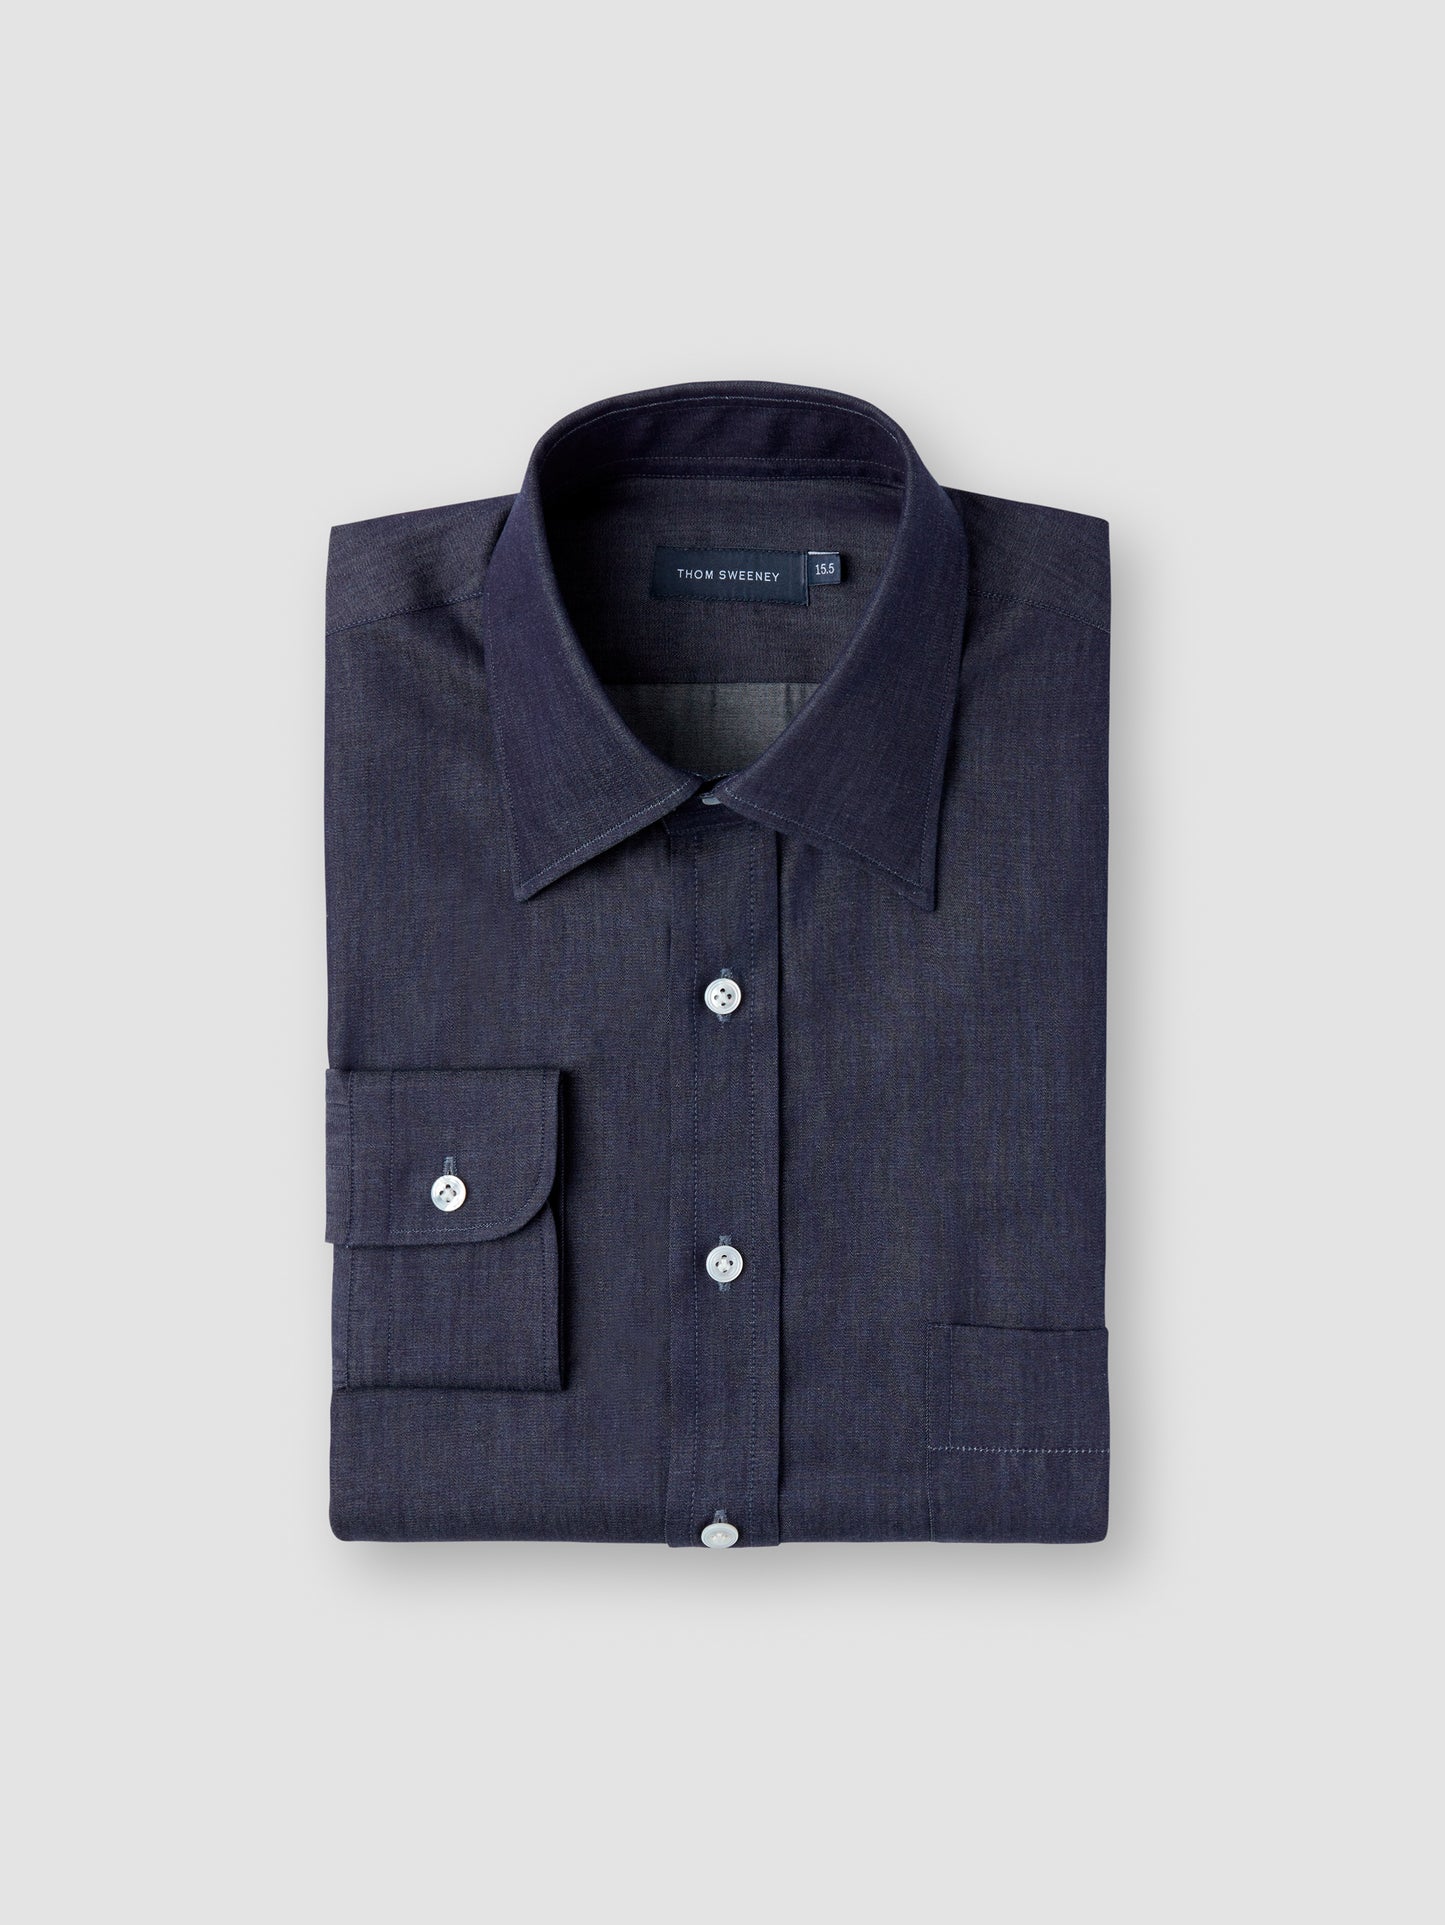 Lecce Collar Cotton Pocket Shirt Product Image